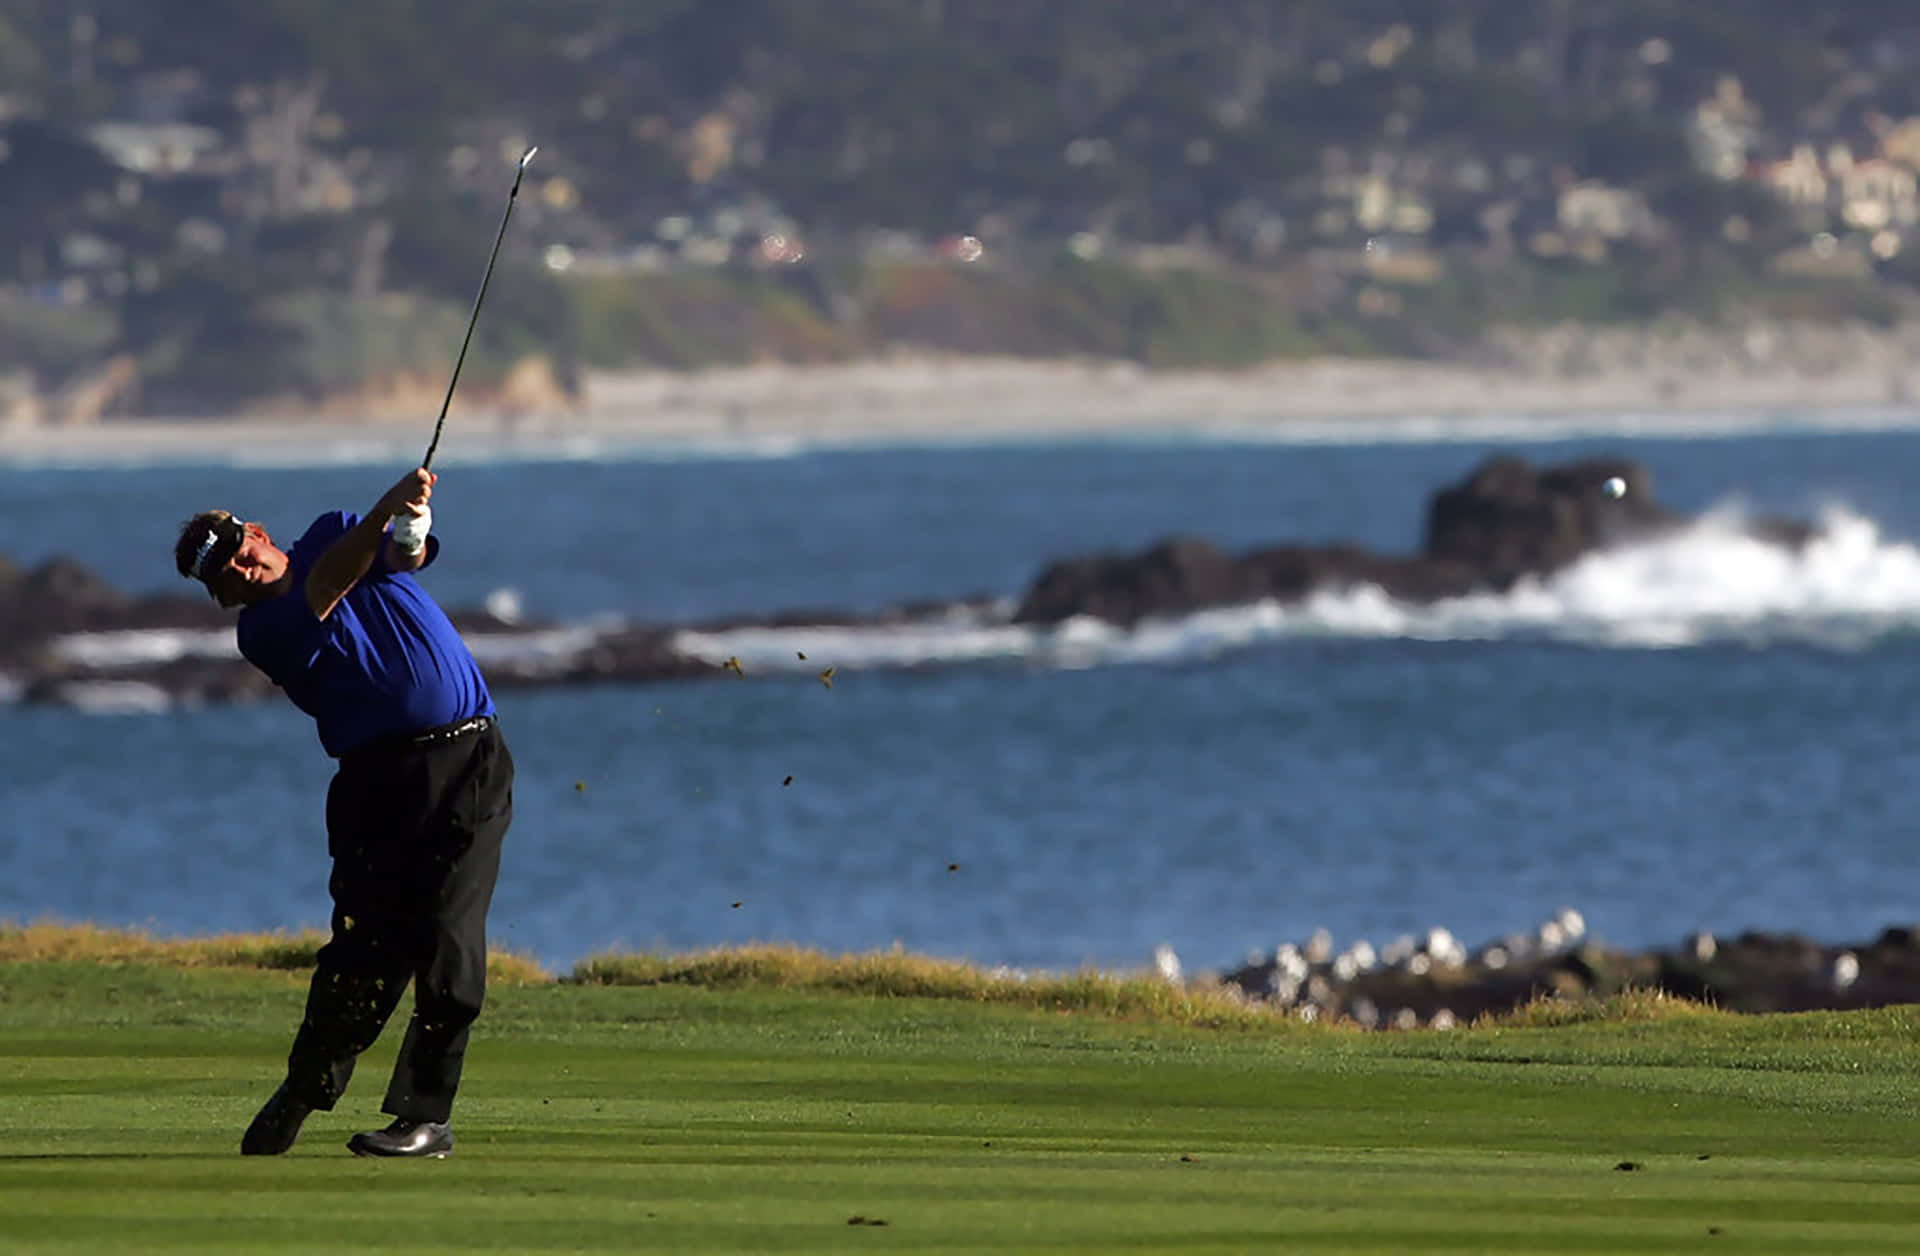 Steve Lowery Golfing By The Beach Wallpaper